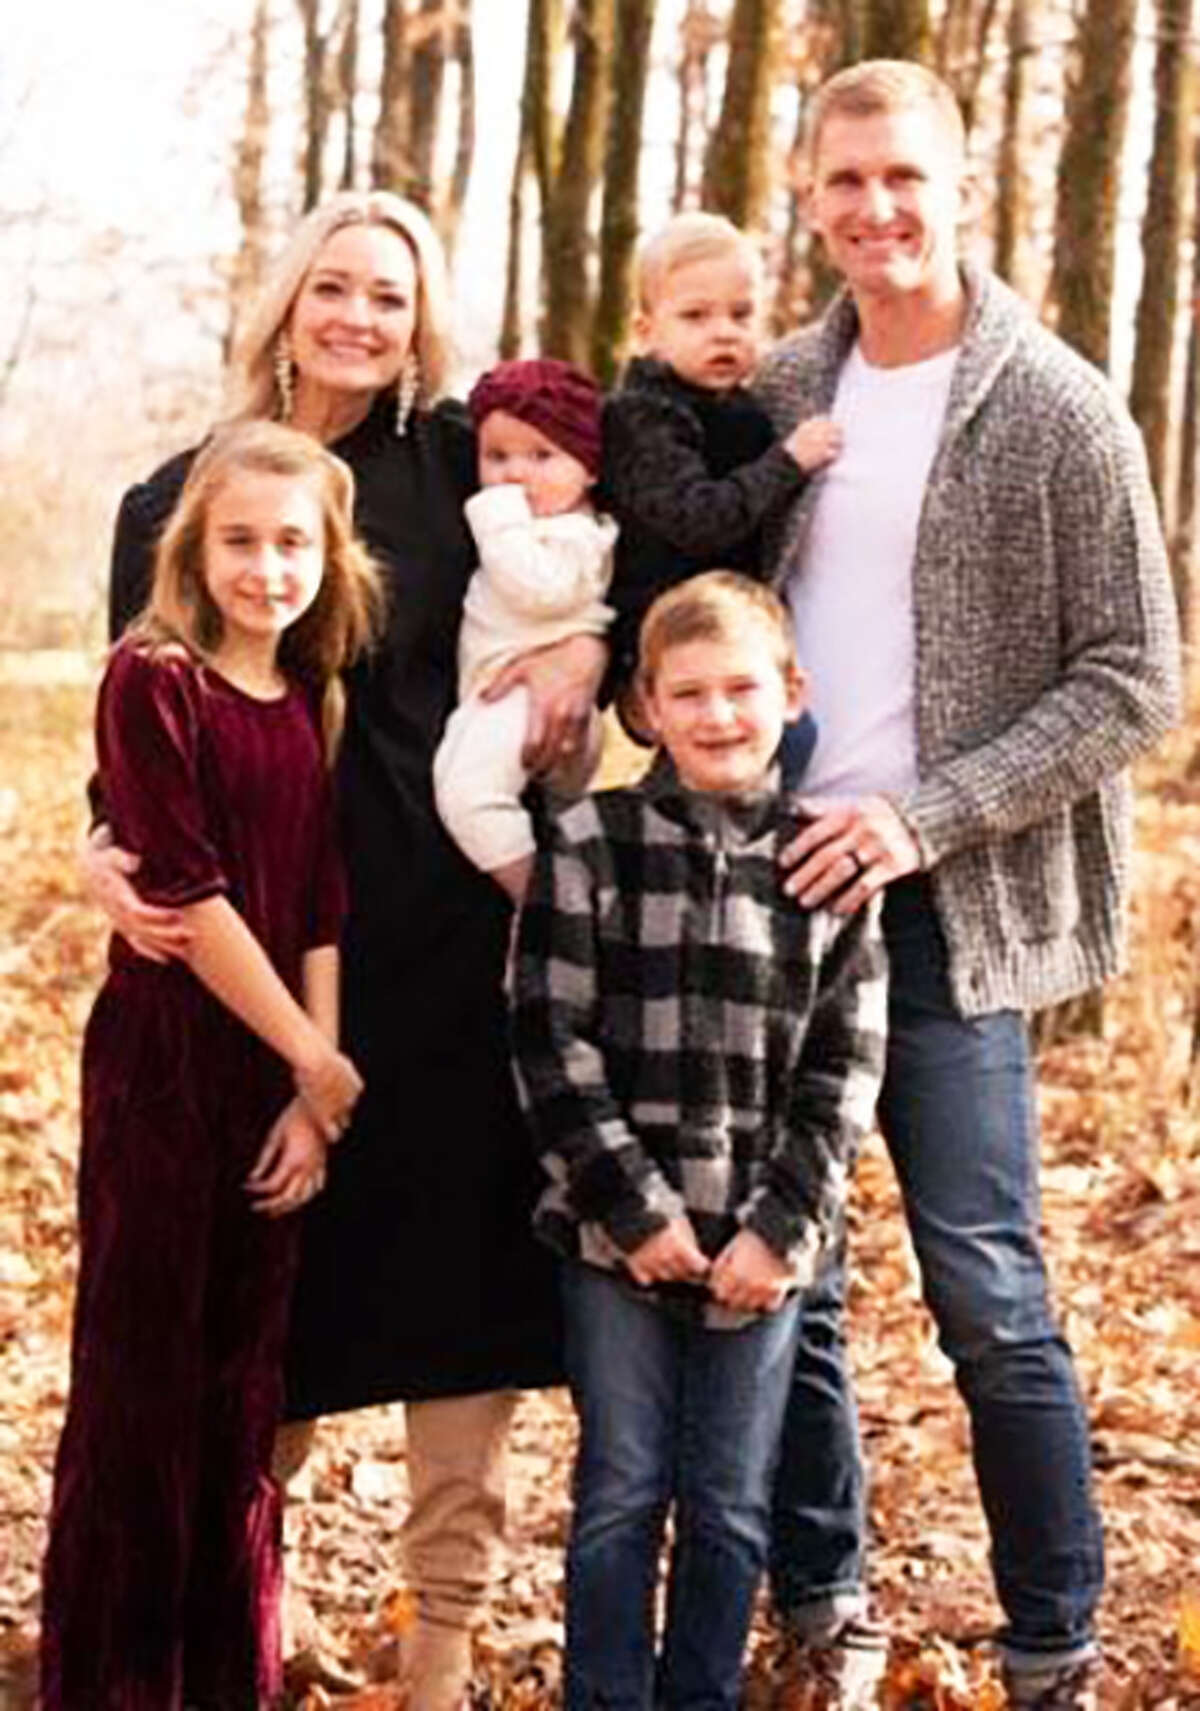 Former Edwardsville assistant football coach Scott Battas and his wife Kara with children Brynn, Beau, Baer and Britt.